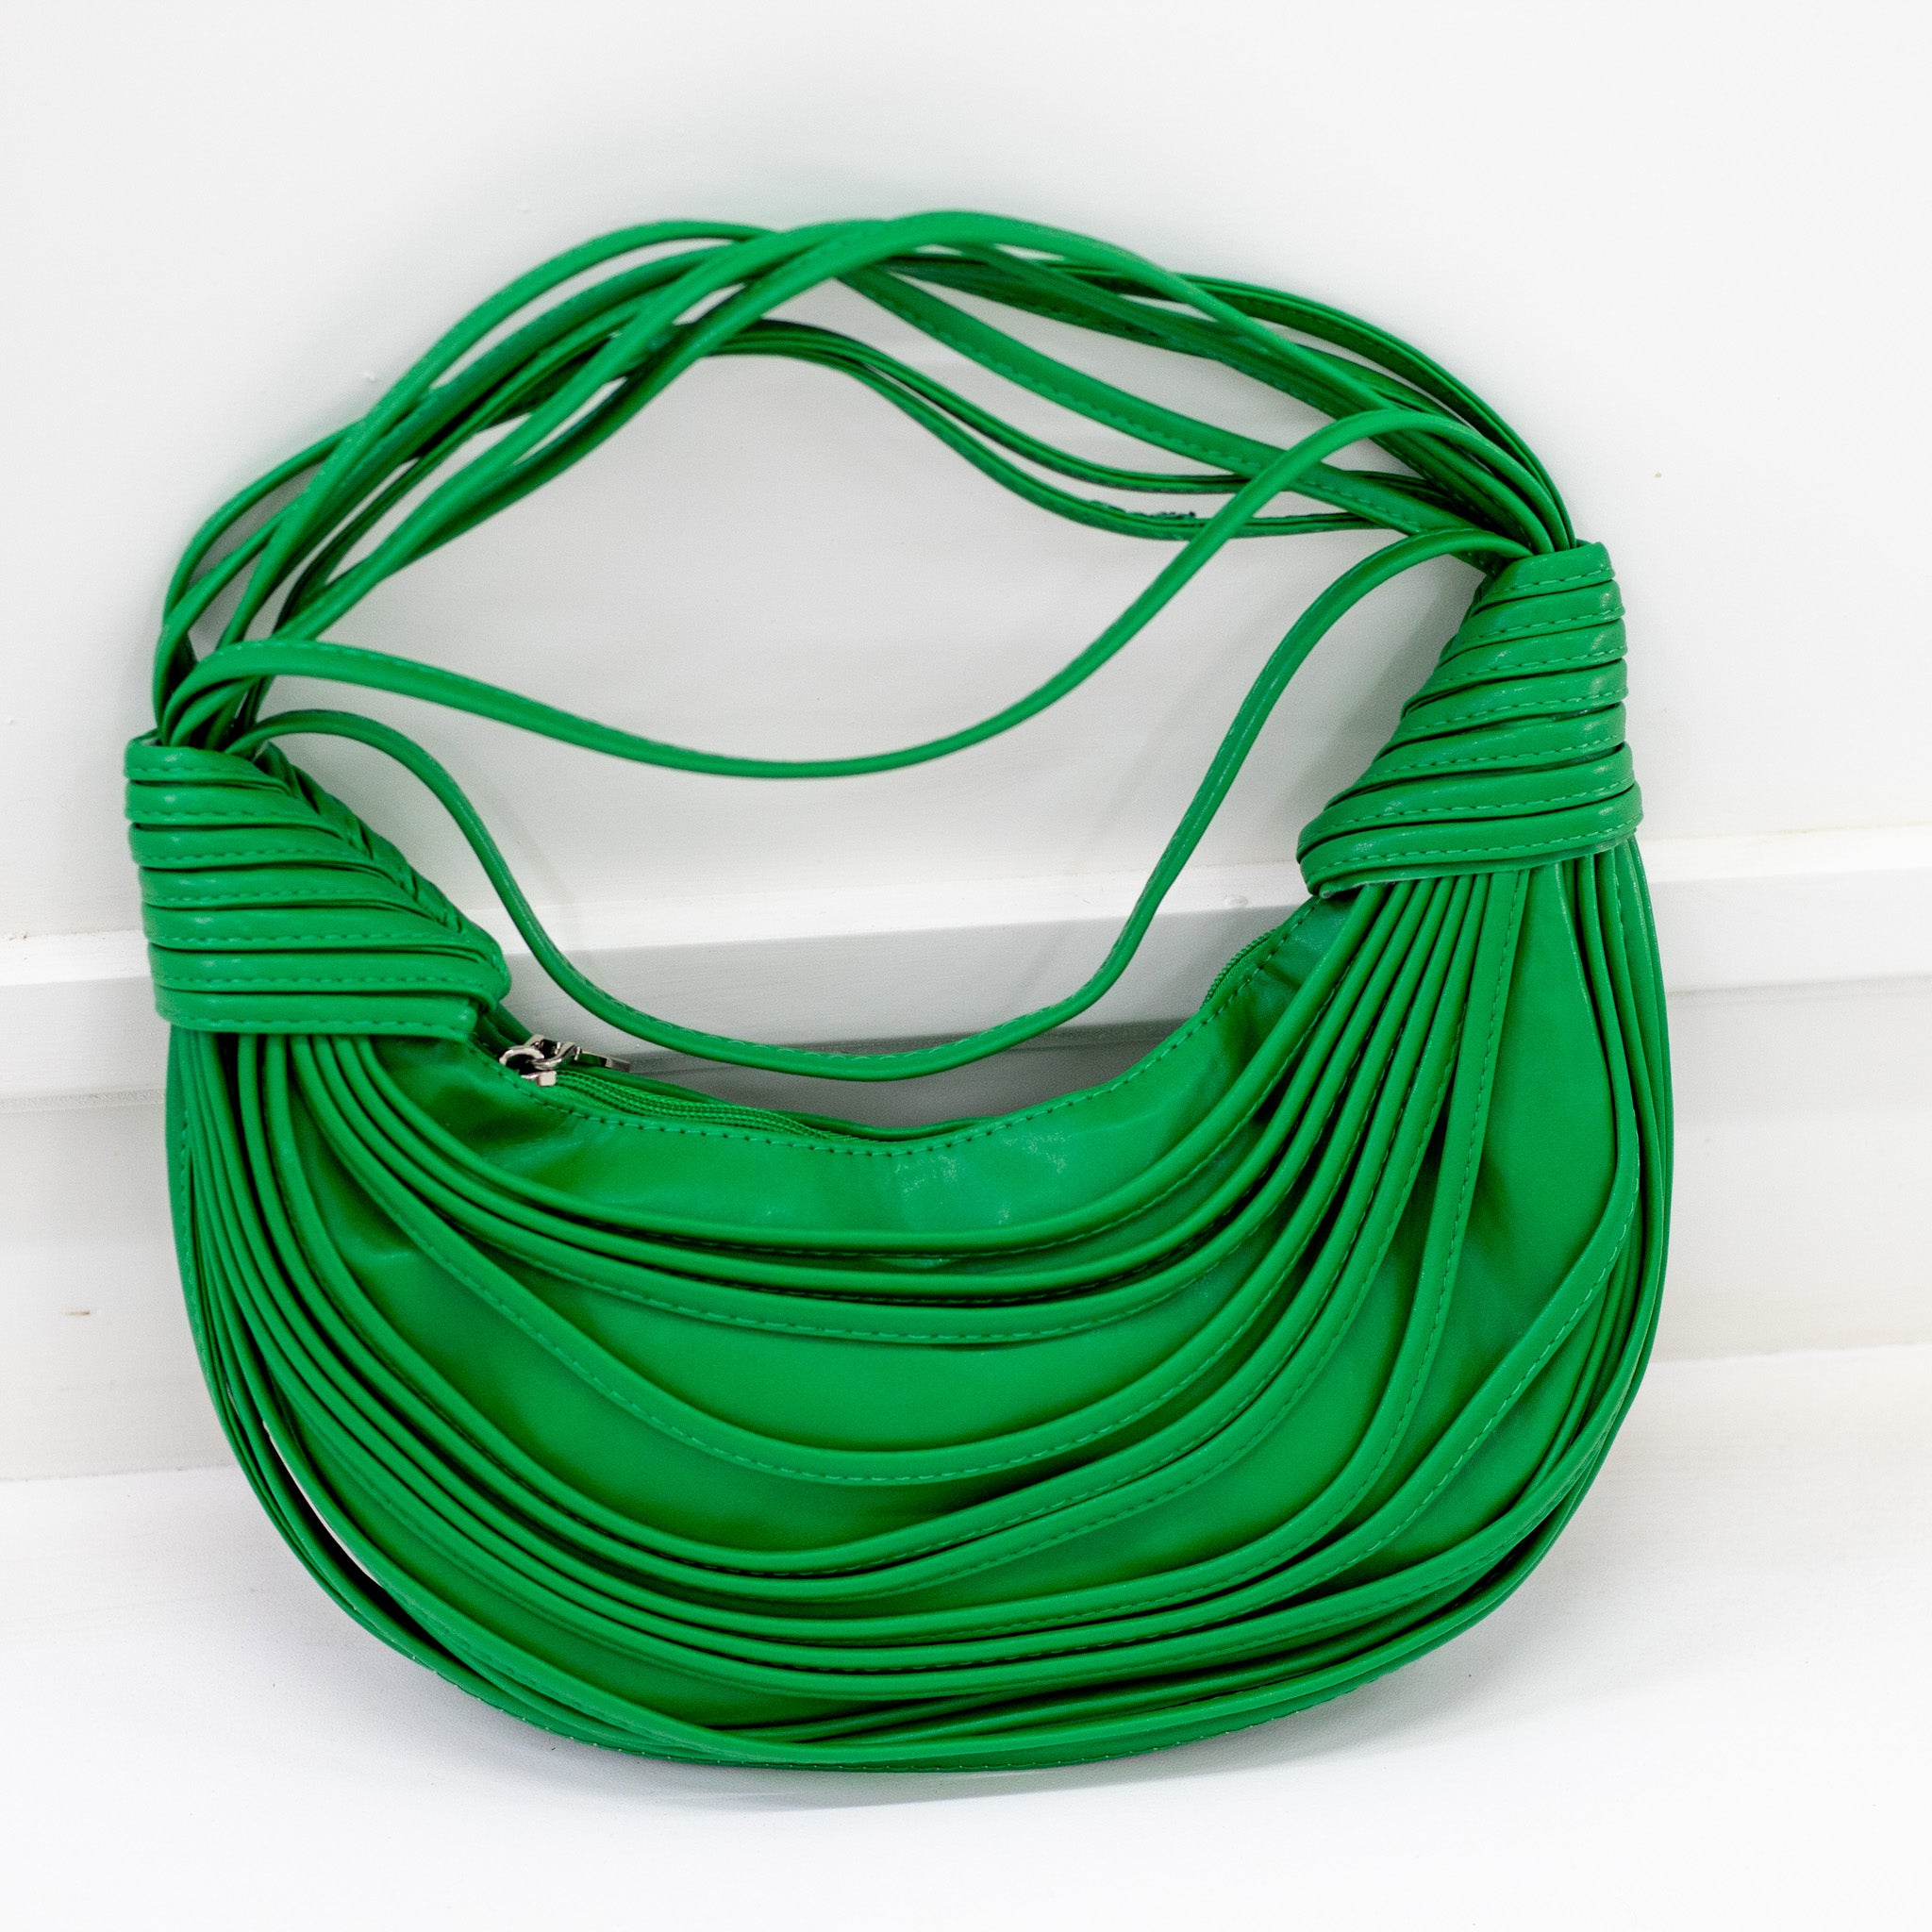 Green strippy belts rigid shoulder bag shibz